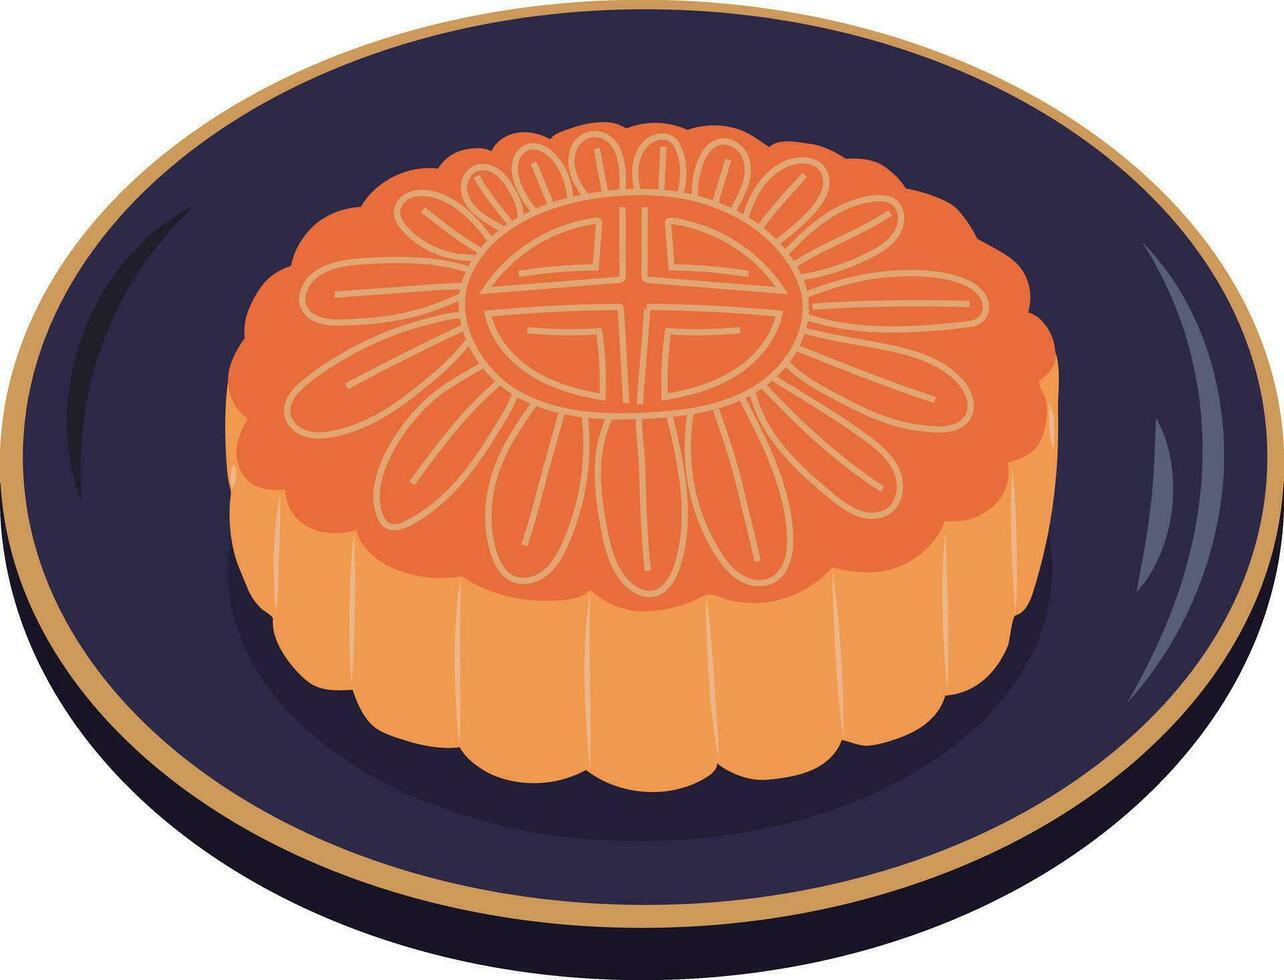 Moon Cake Traditional Dessert Illustration Graphic Element Art Card vector